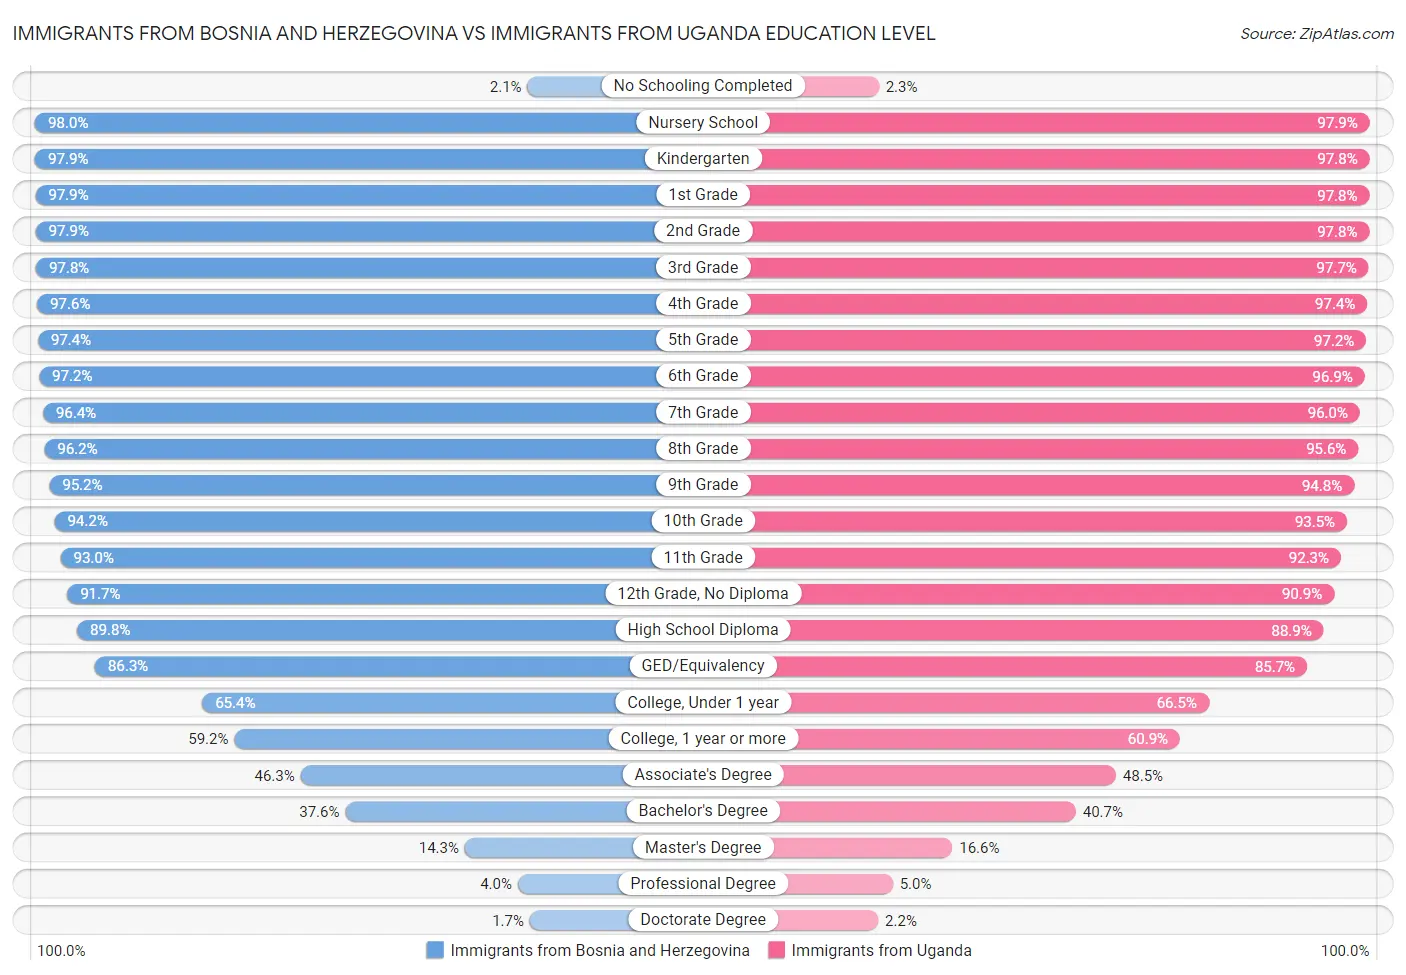 Immigrants from Bosnia and Herzegovina vs Immigrants from Uganda Education Level